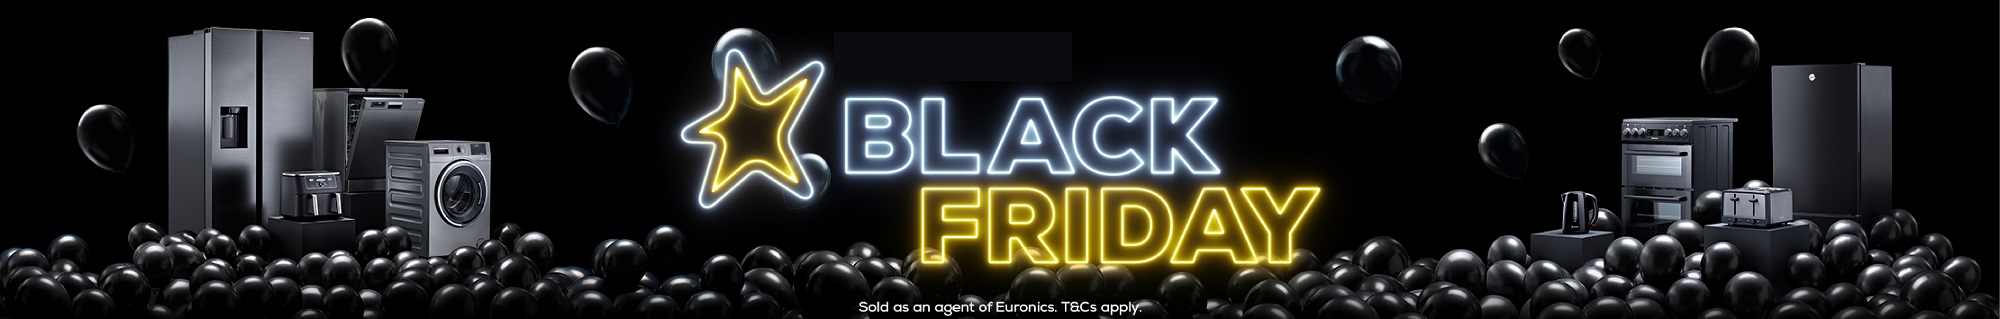 Euronics Black Friday Offers